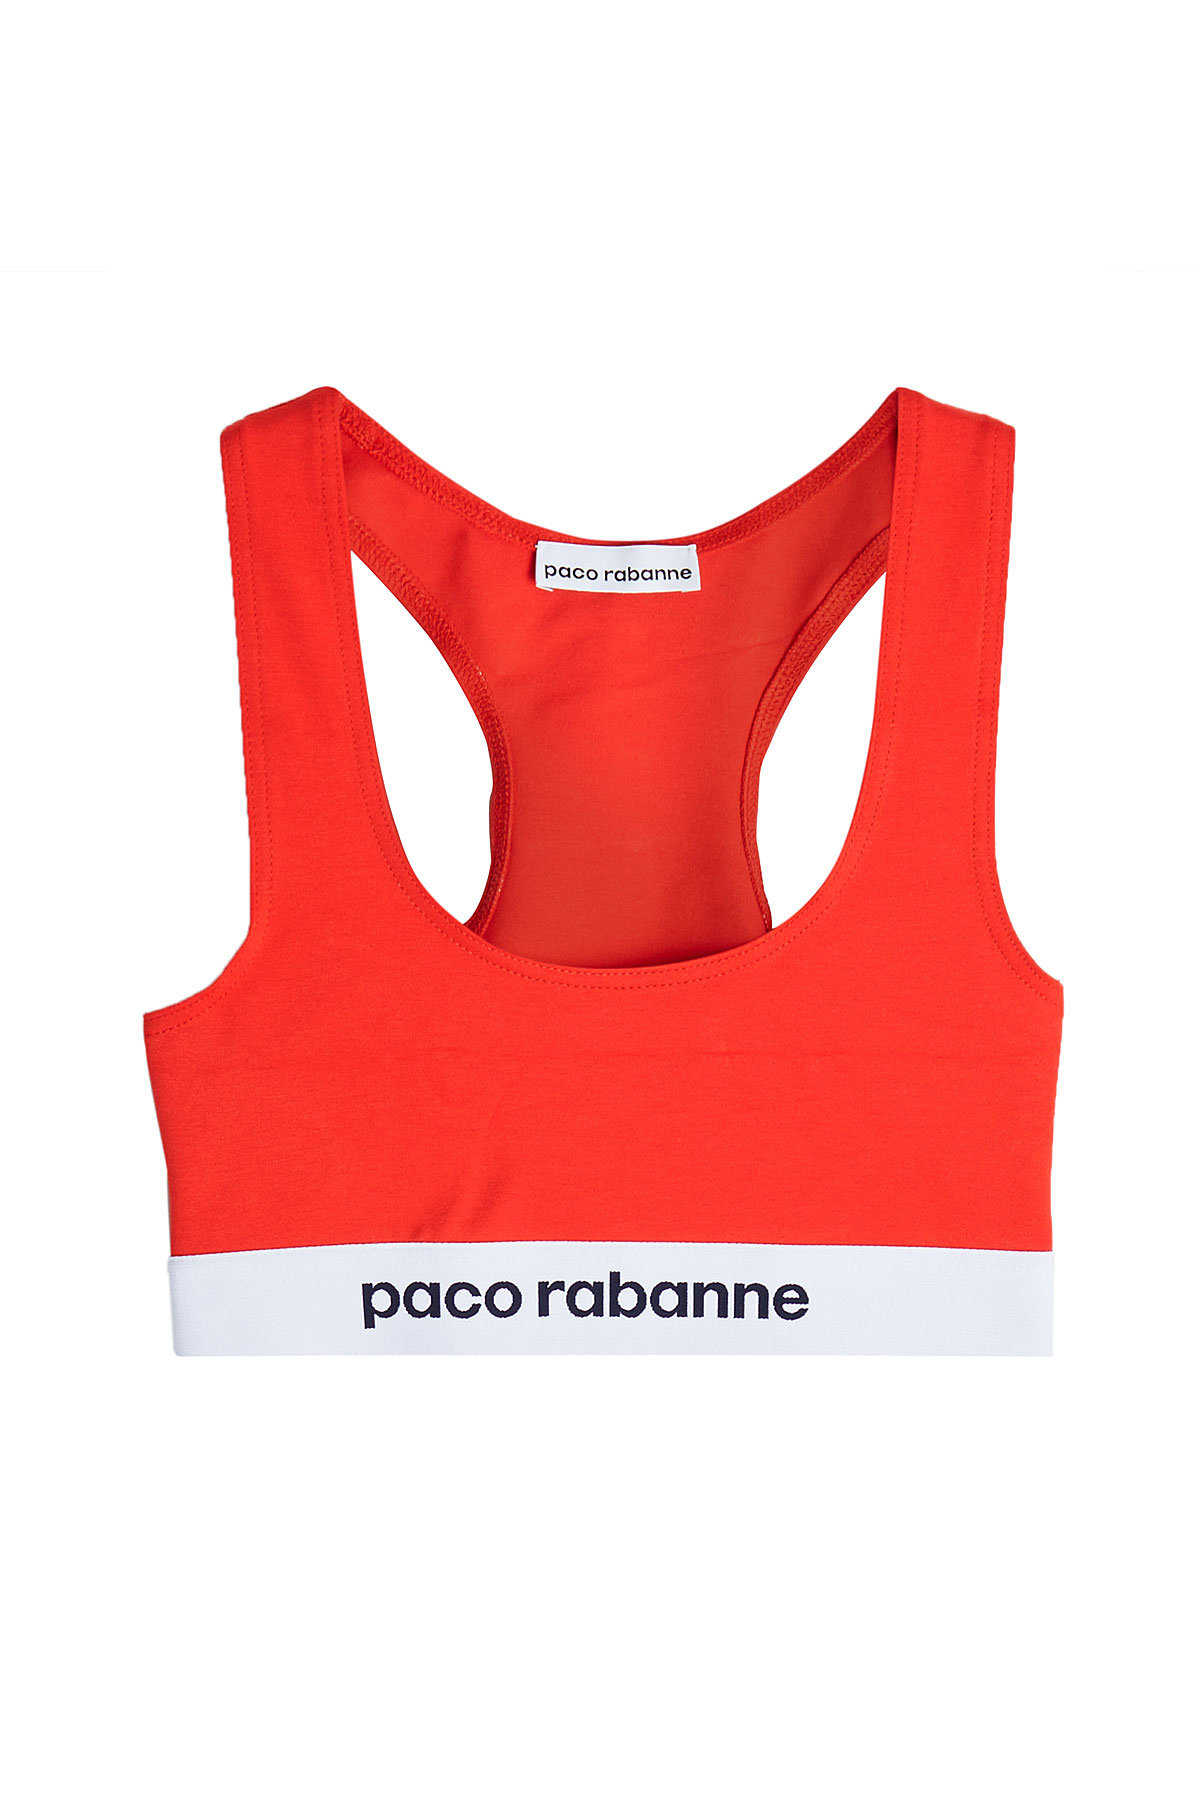 Paco Rabanne - Logo Bra Top